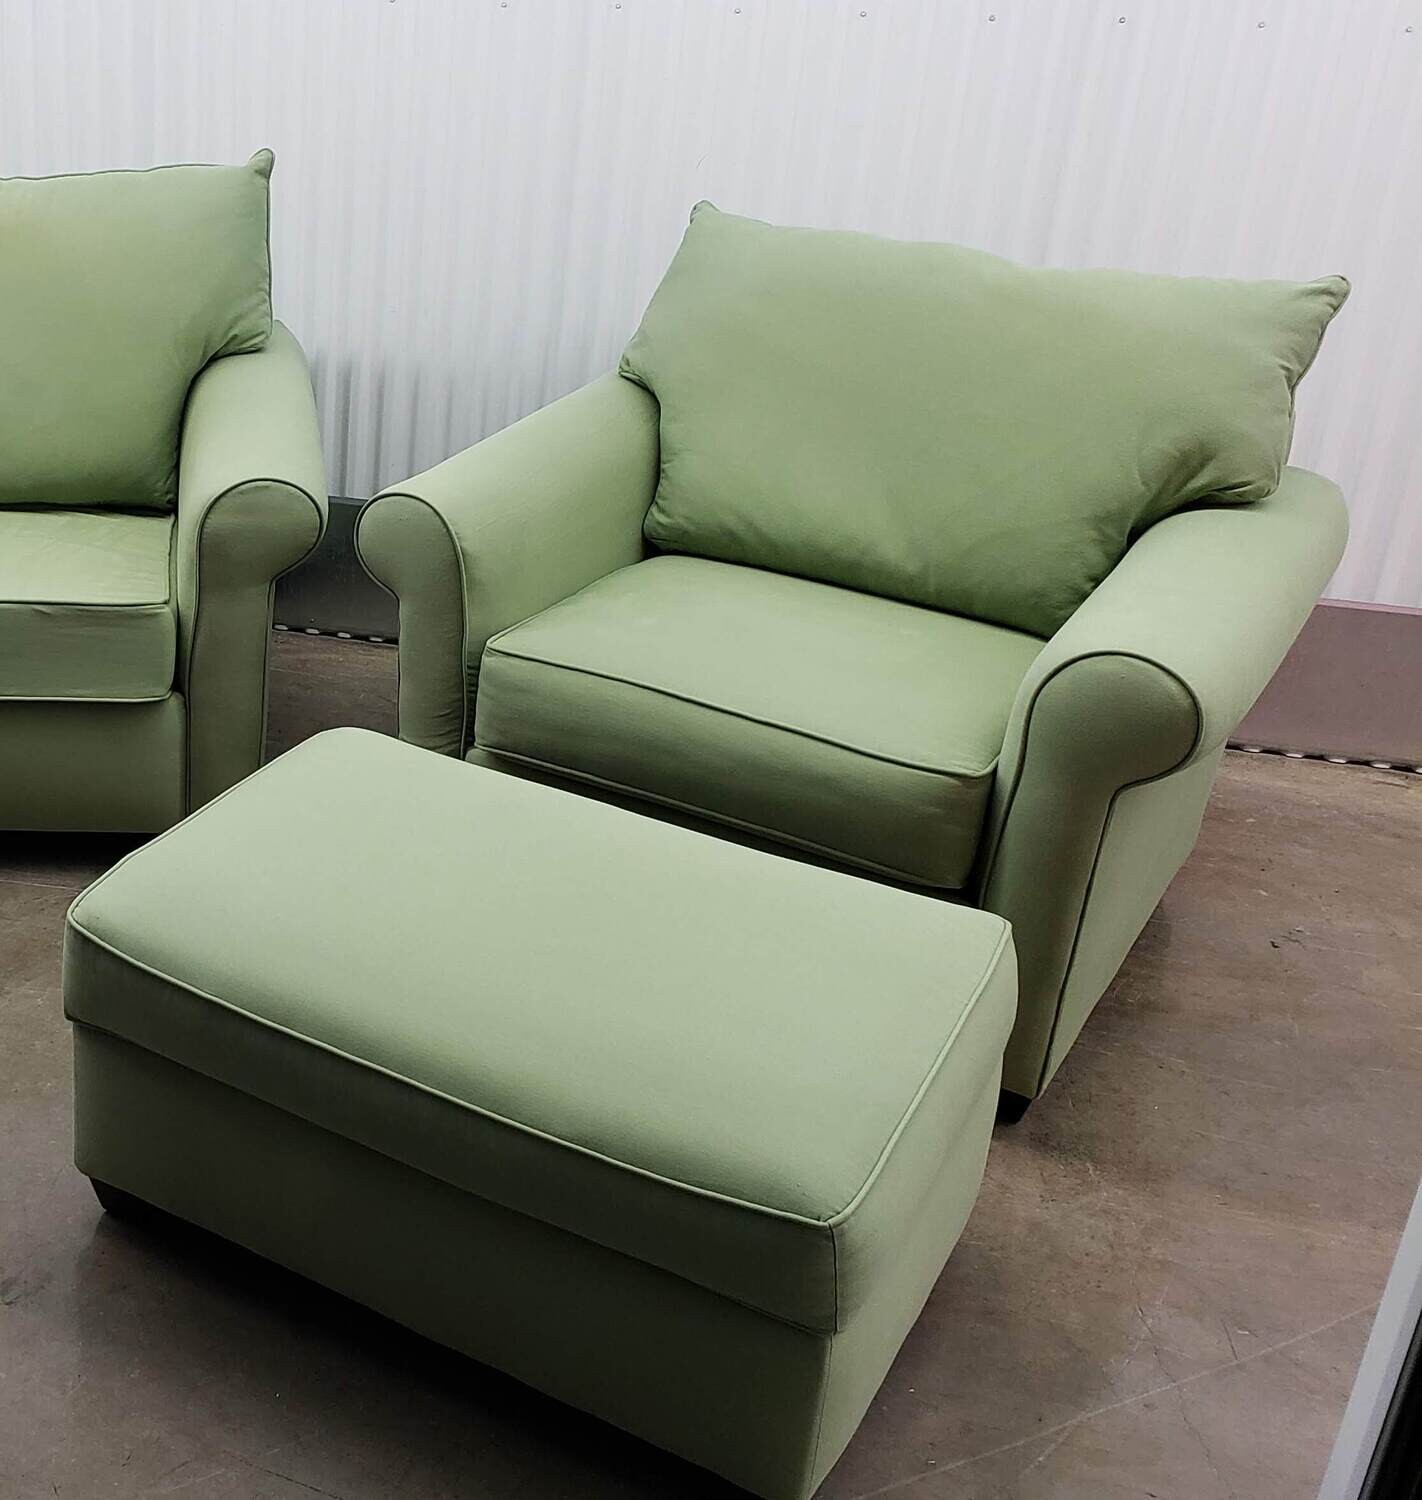 Allan White Arm Chair & Ottoman, light green #2322